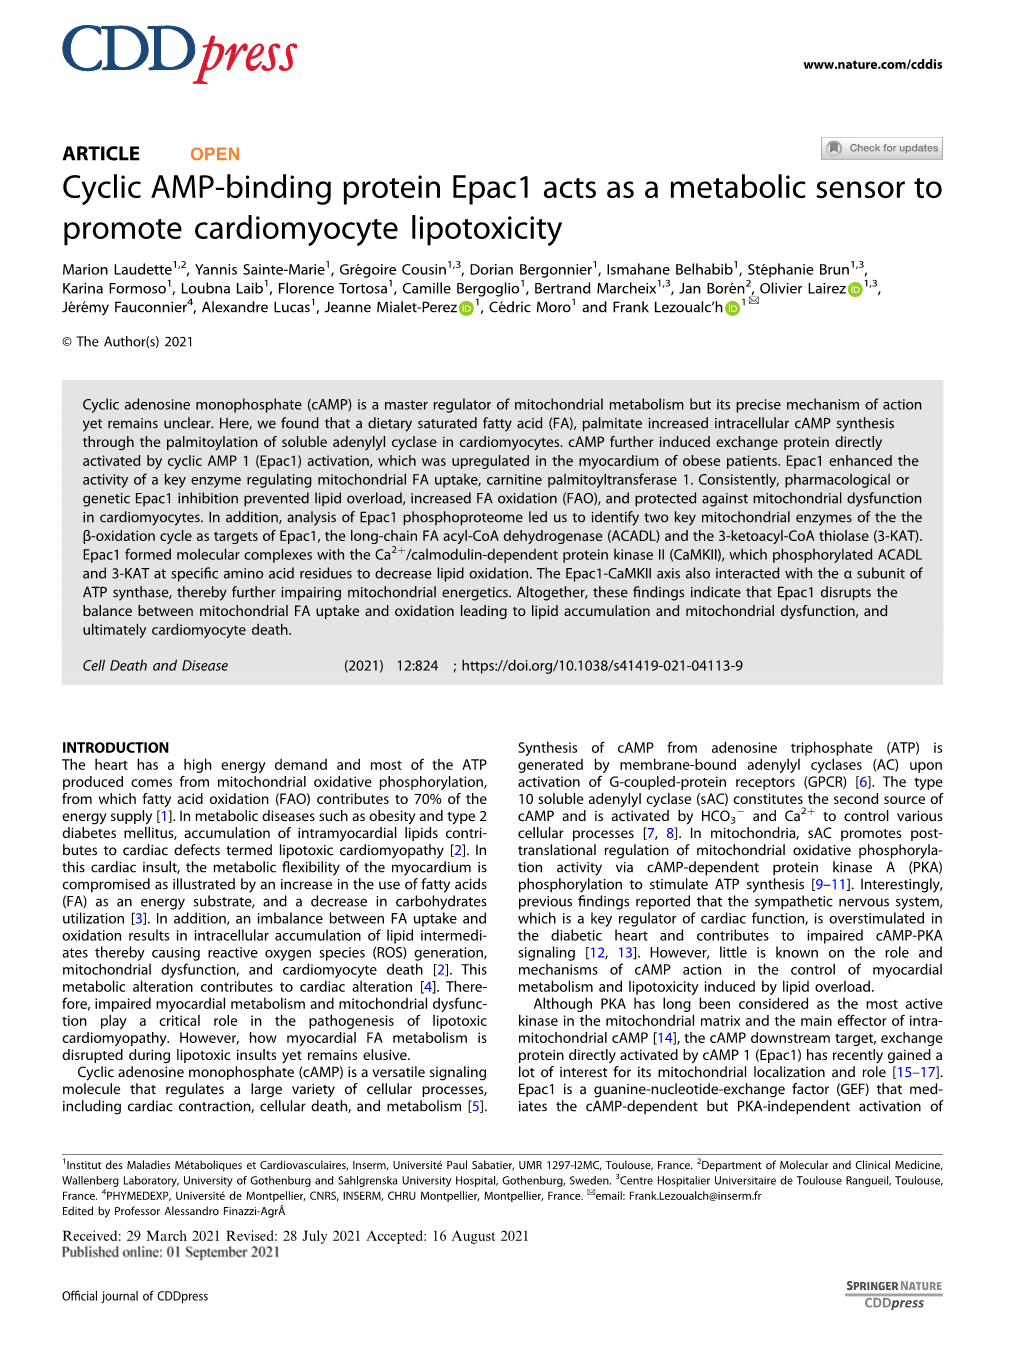 Cyclic AMP-Binding Protein Epac1 Acts As a Metabolic Sensor to Promote Cardiomyocyte Lipotoxicity